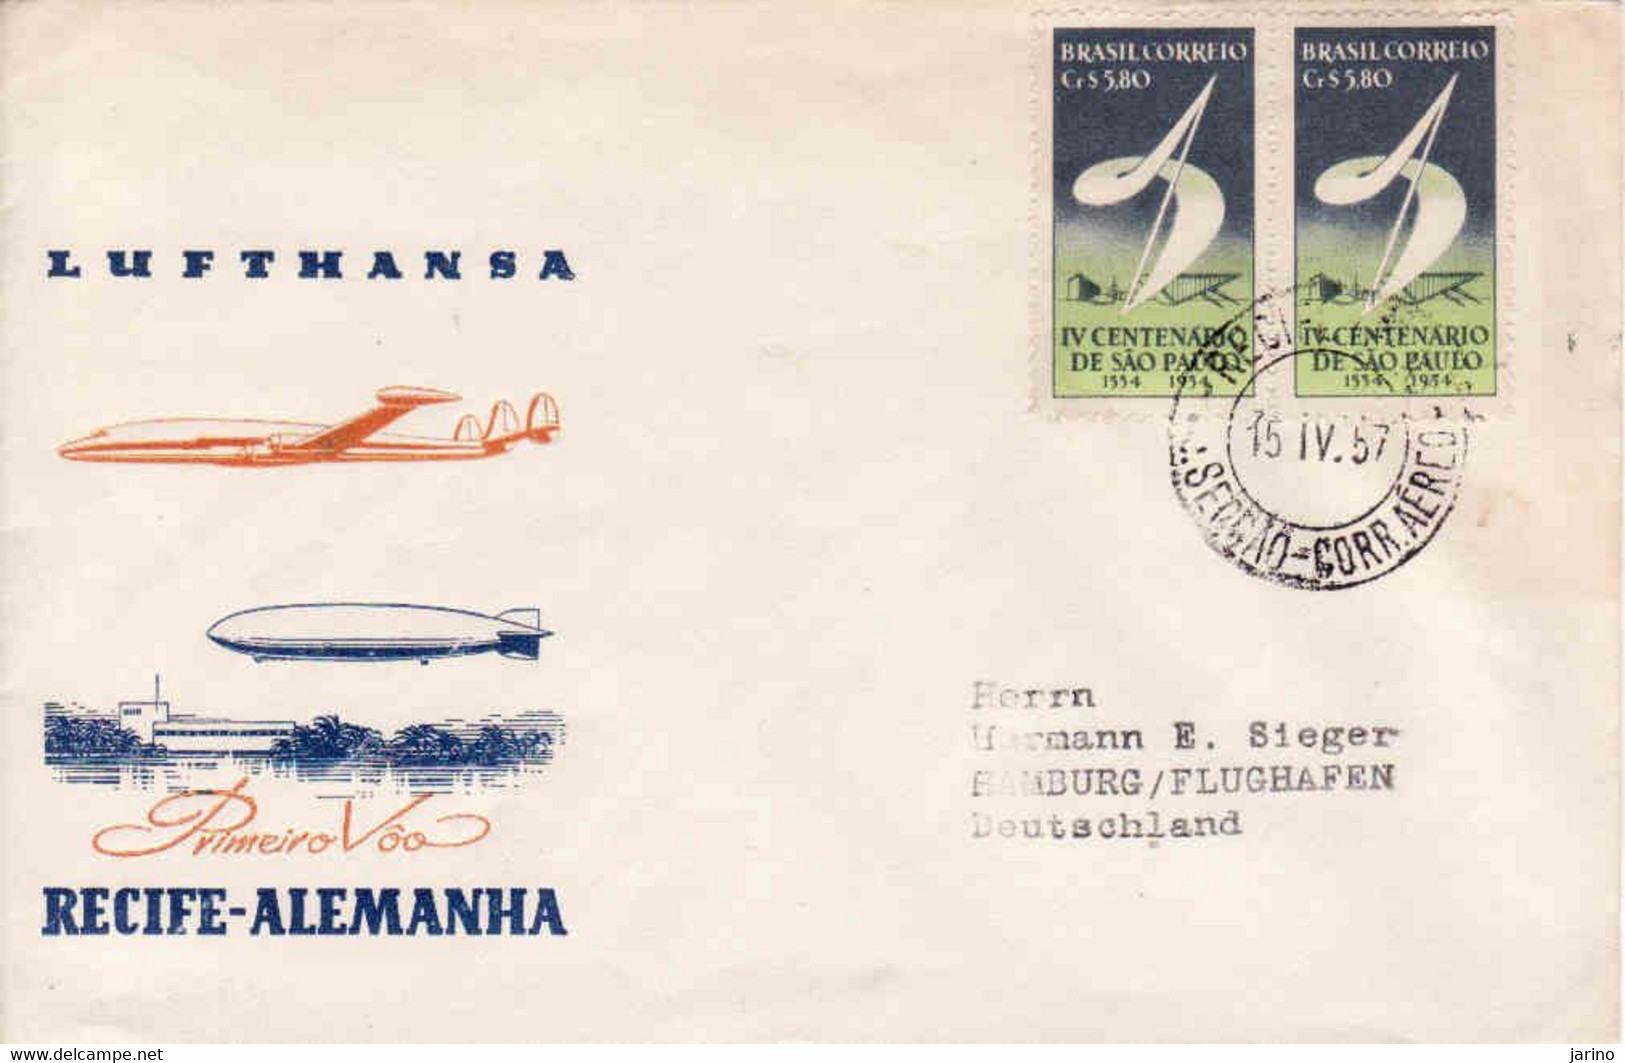 Brasilia 1957, Lufpost Lufthansa Firstflug Recife Alemania, Hamburg Flughafen - Aéreo (empresas Privadas)